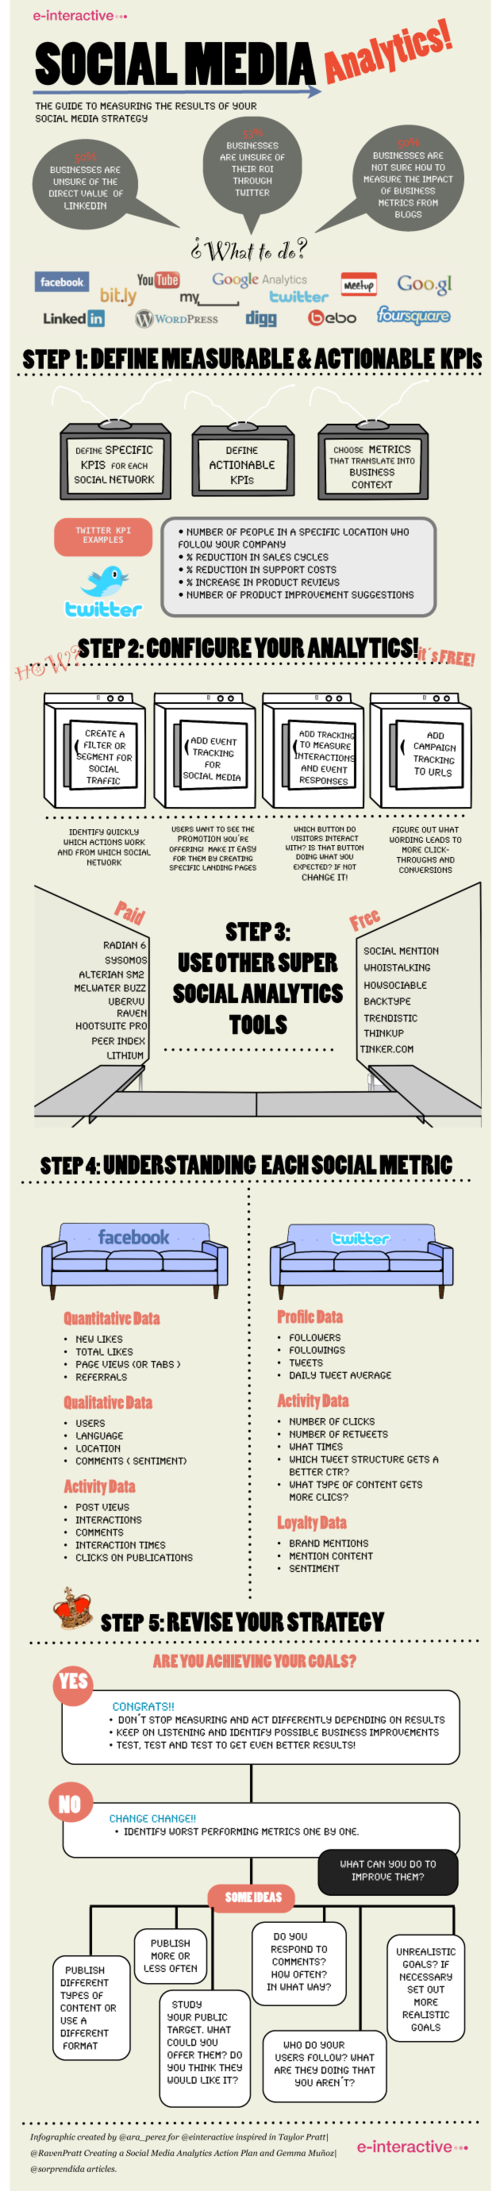 Social Media Analytics [Infographic]